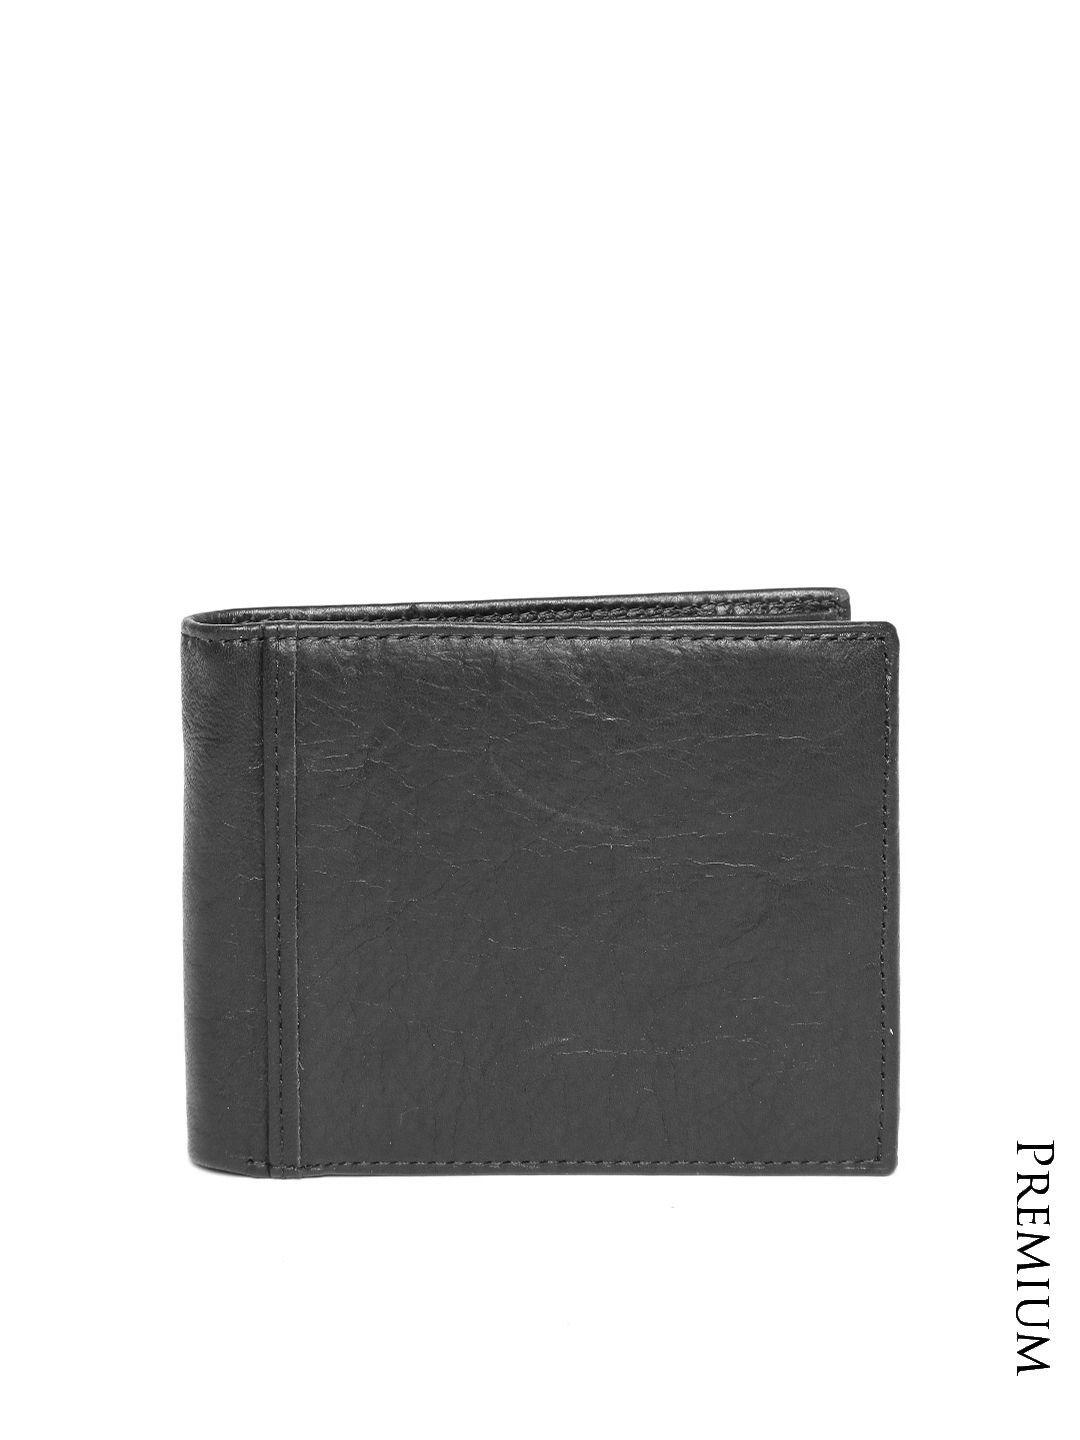 fossil men black genuine leather wallet